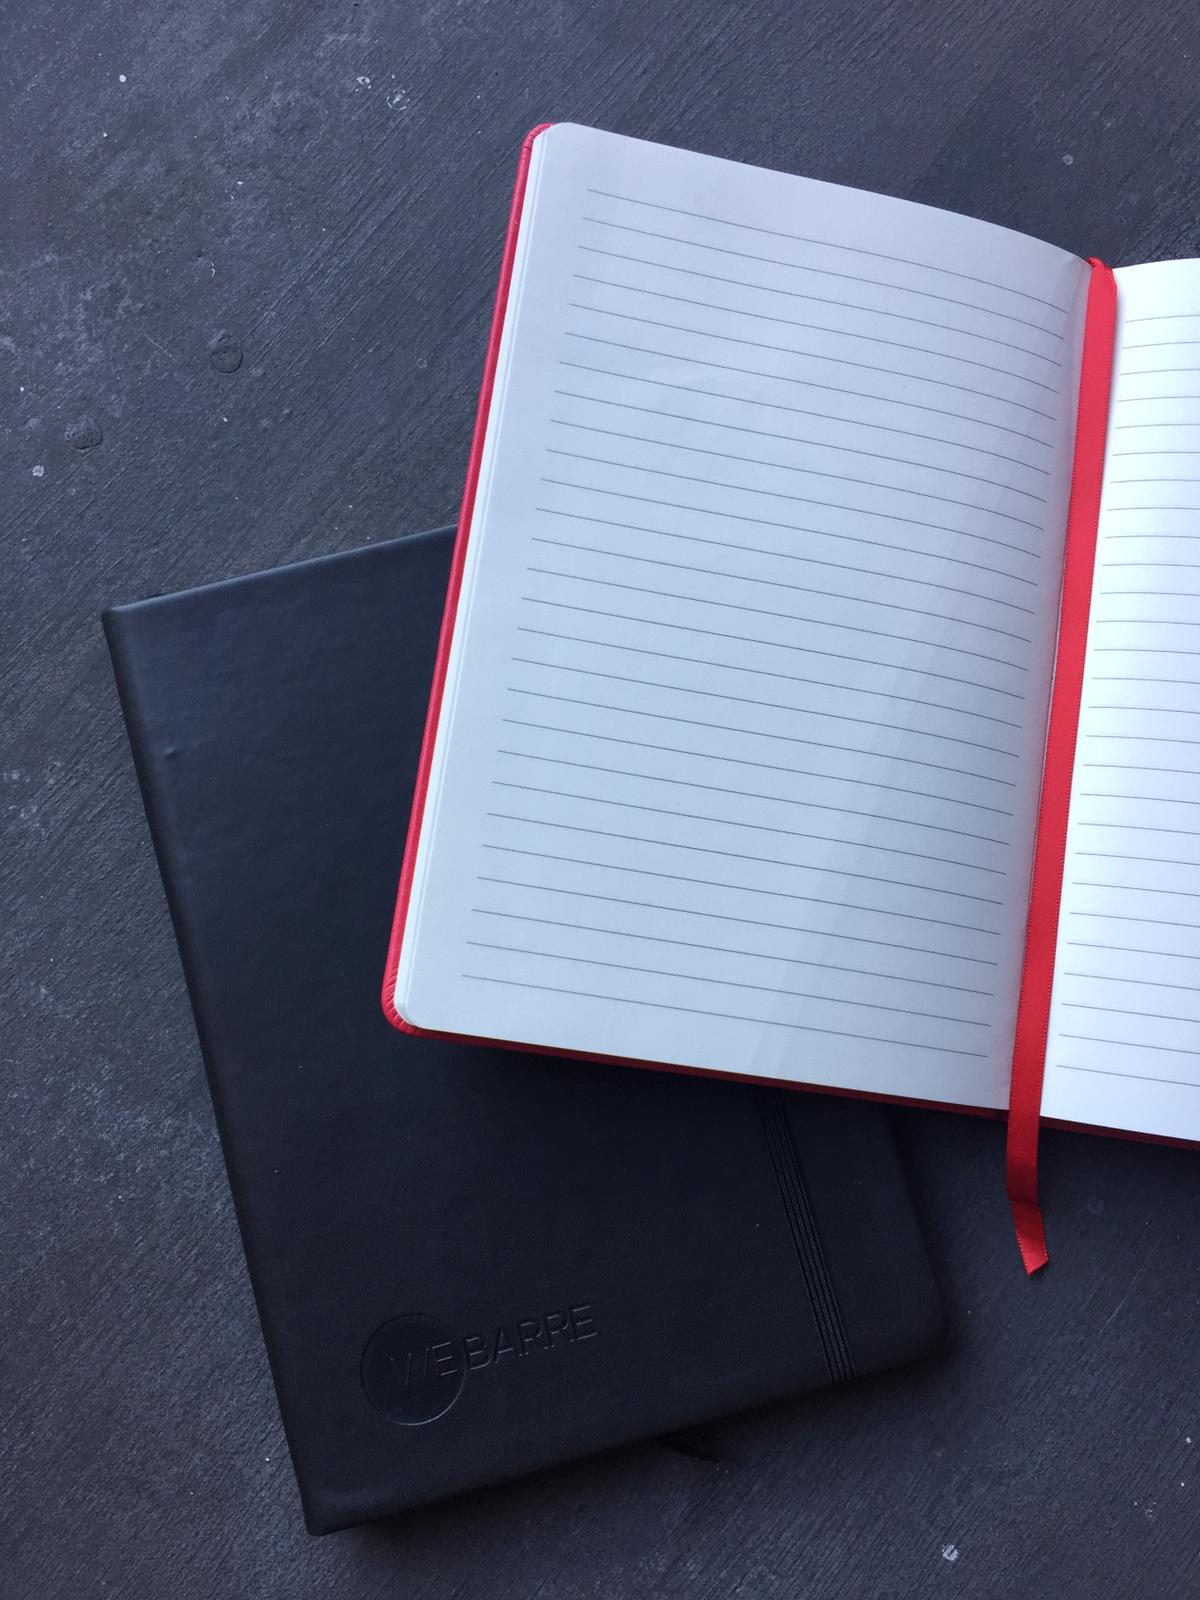 WeBarre Notebook